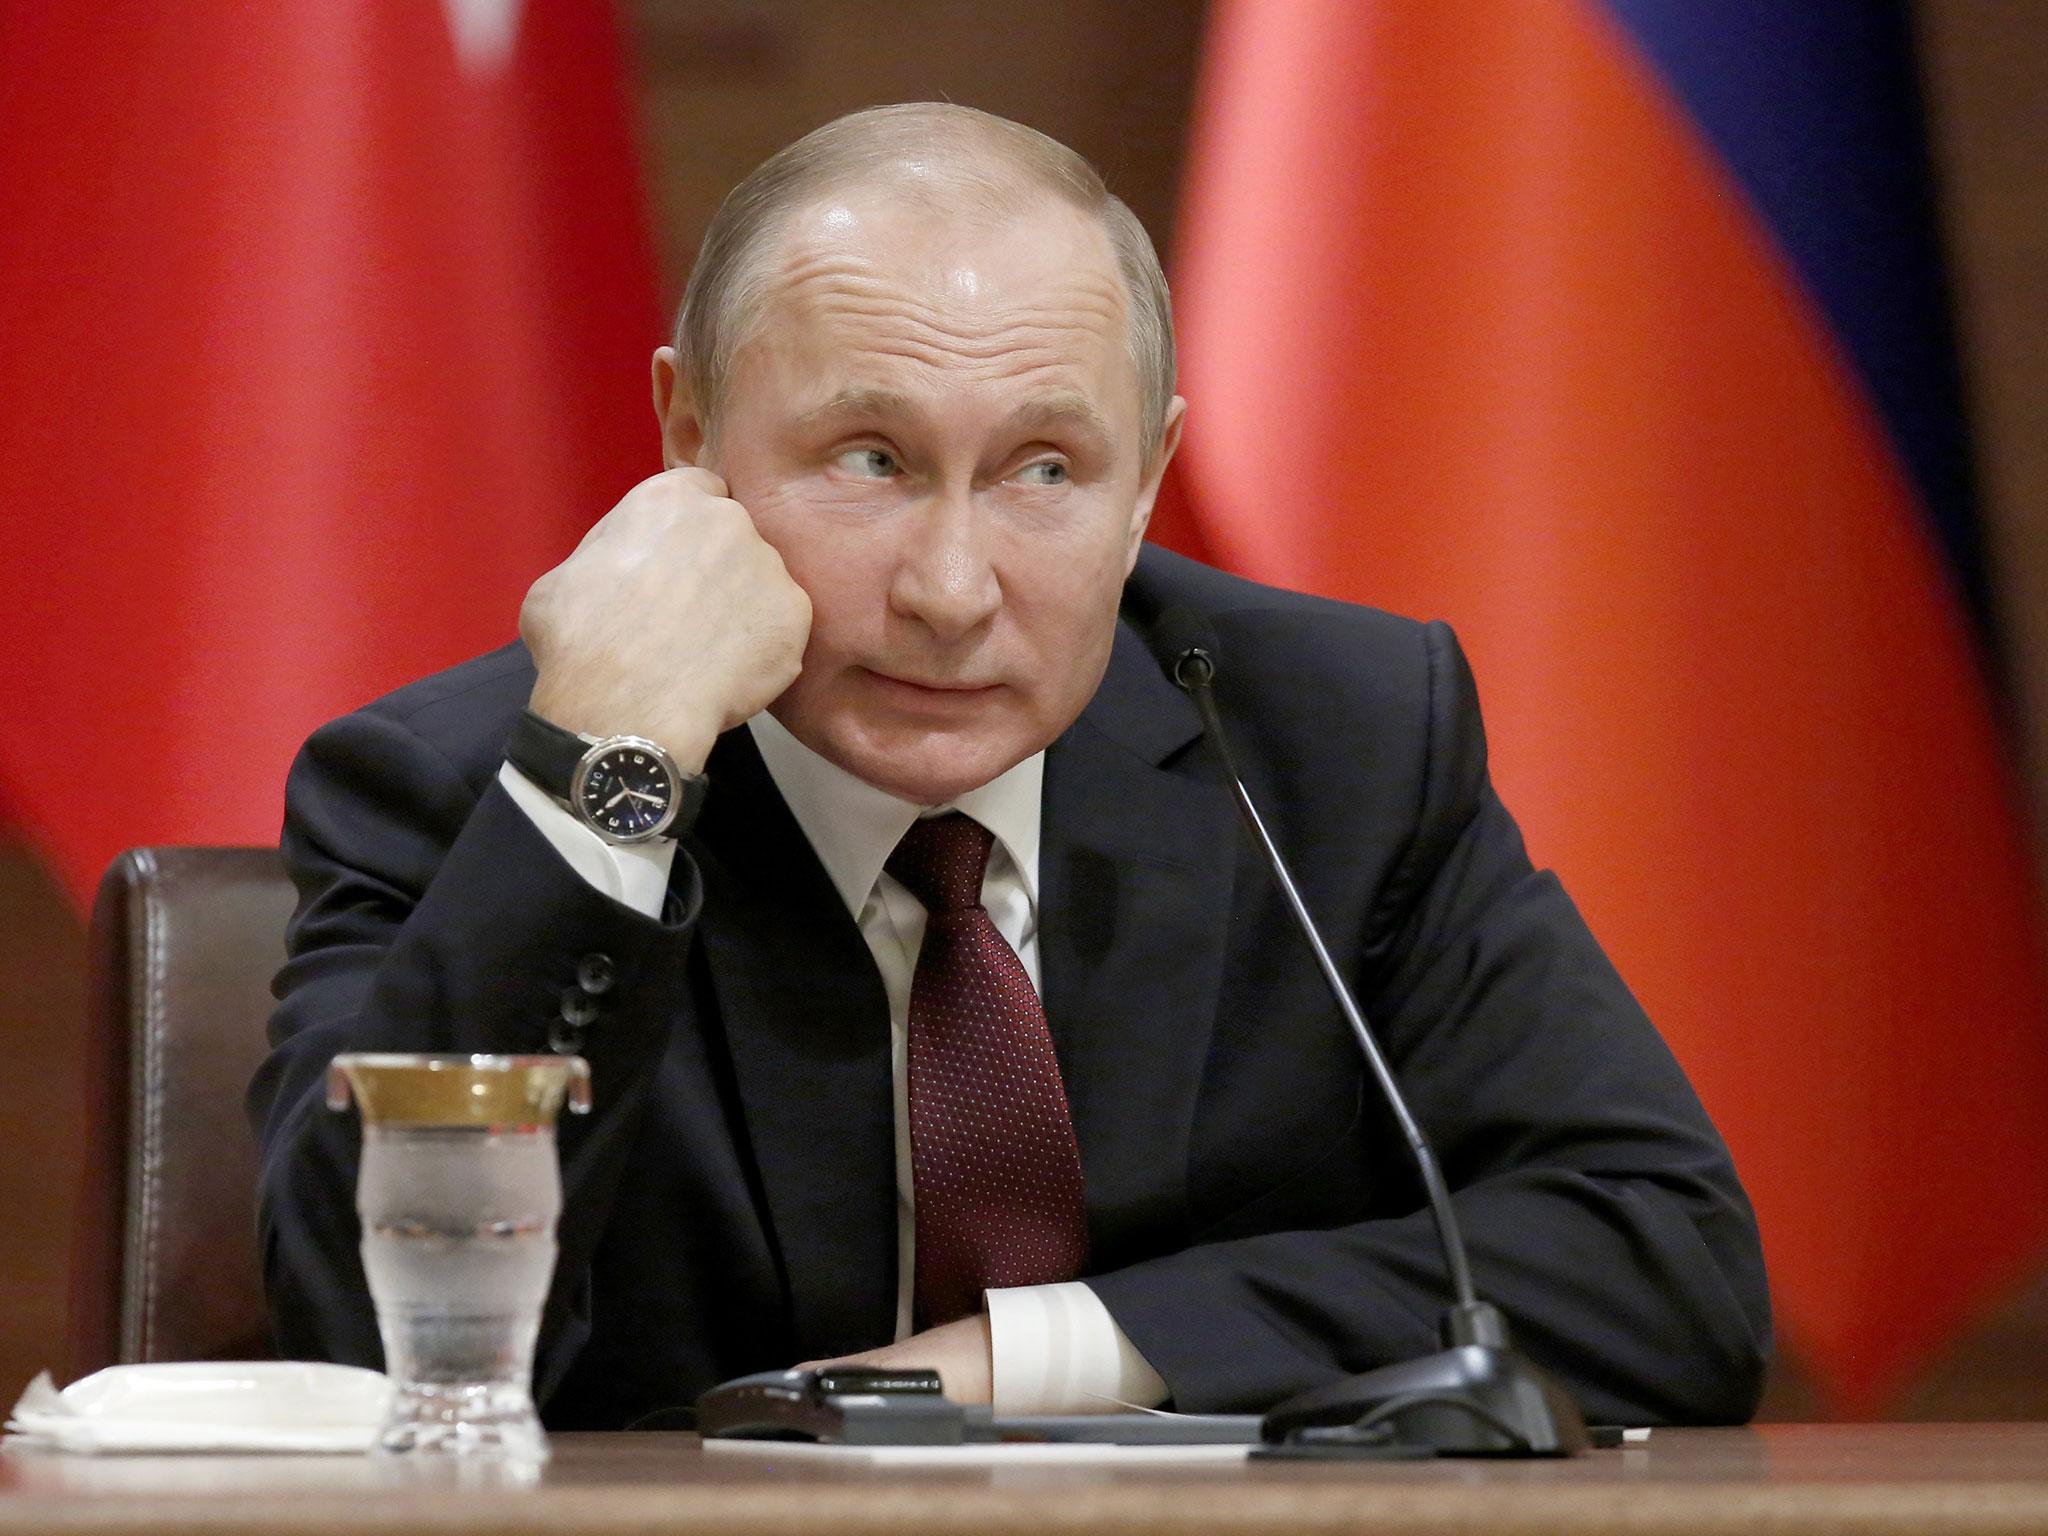 Vladimir Putin has denied sponsoring cyber attacks around the world